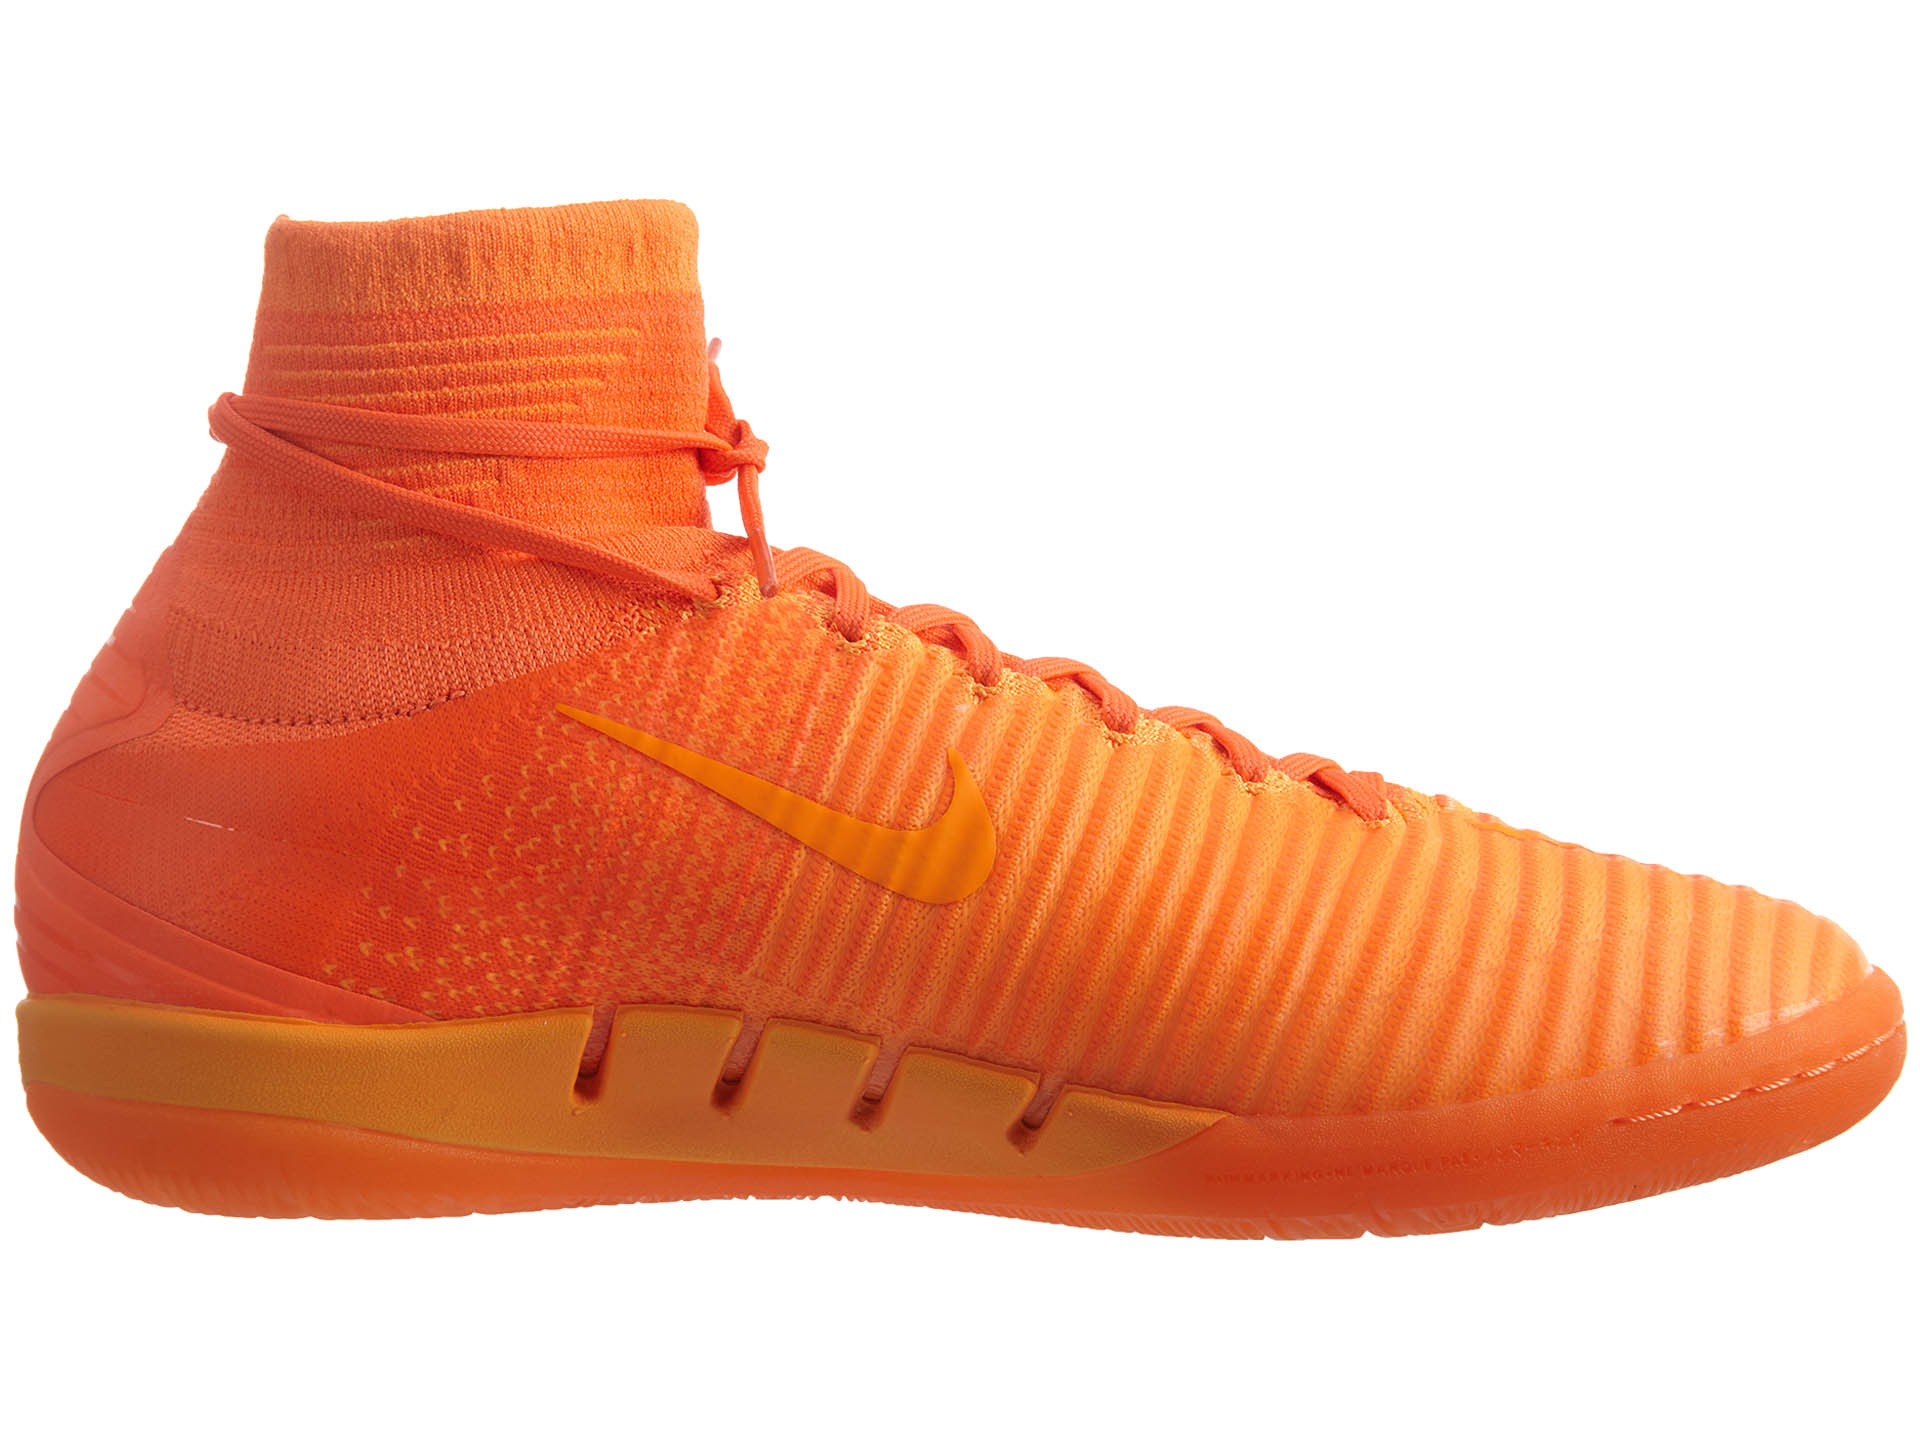 Nike Mercurialx Proximo Ii Ic Total Orange/Bright Ctrs-Hyper ...